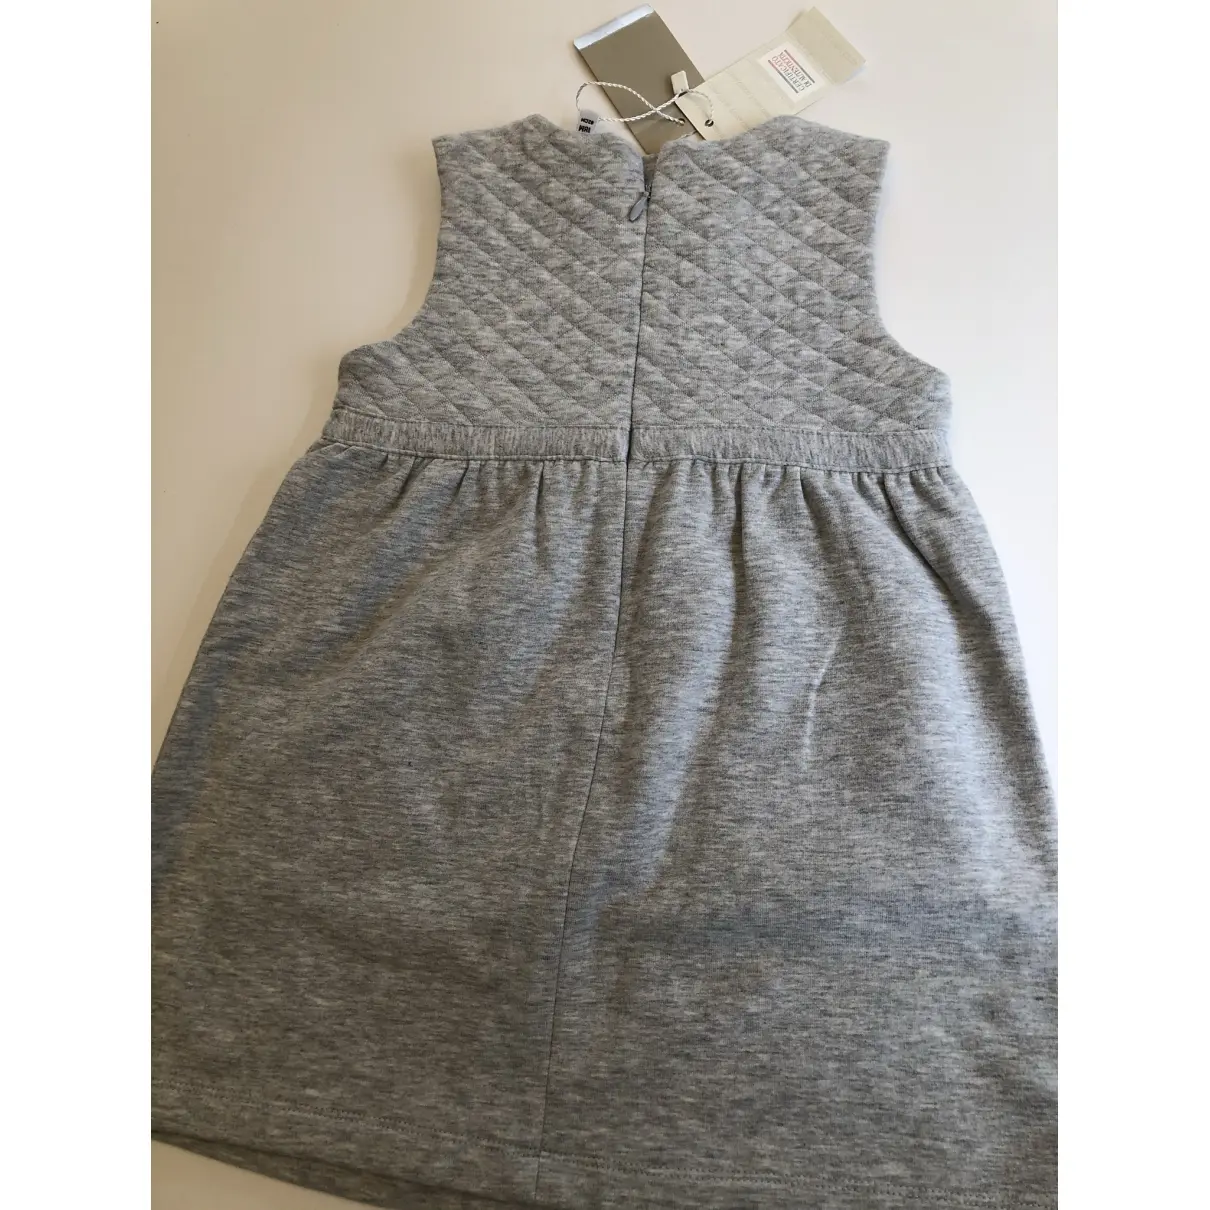 Buy Armani Baby Dress online